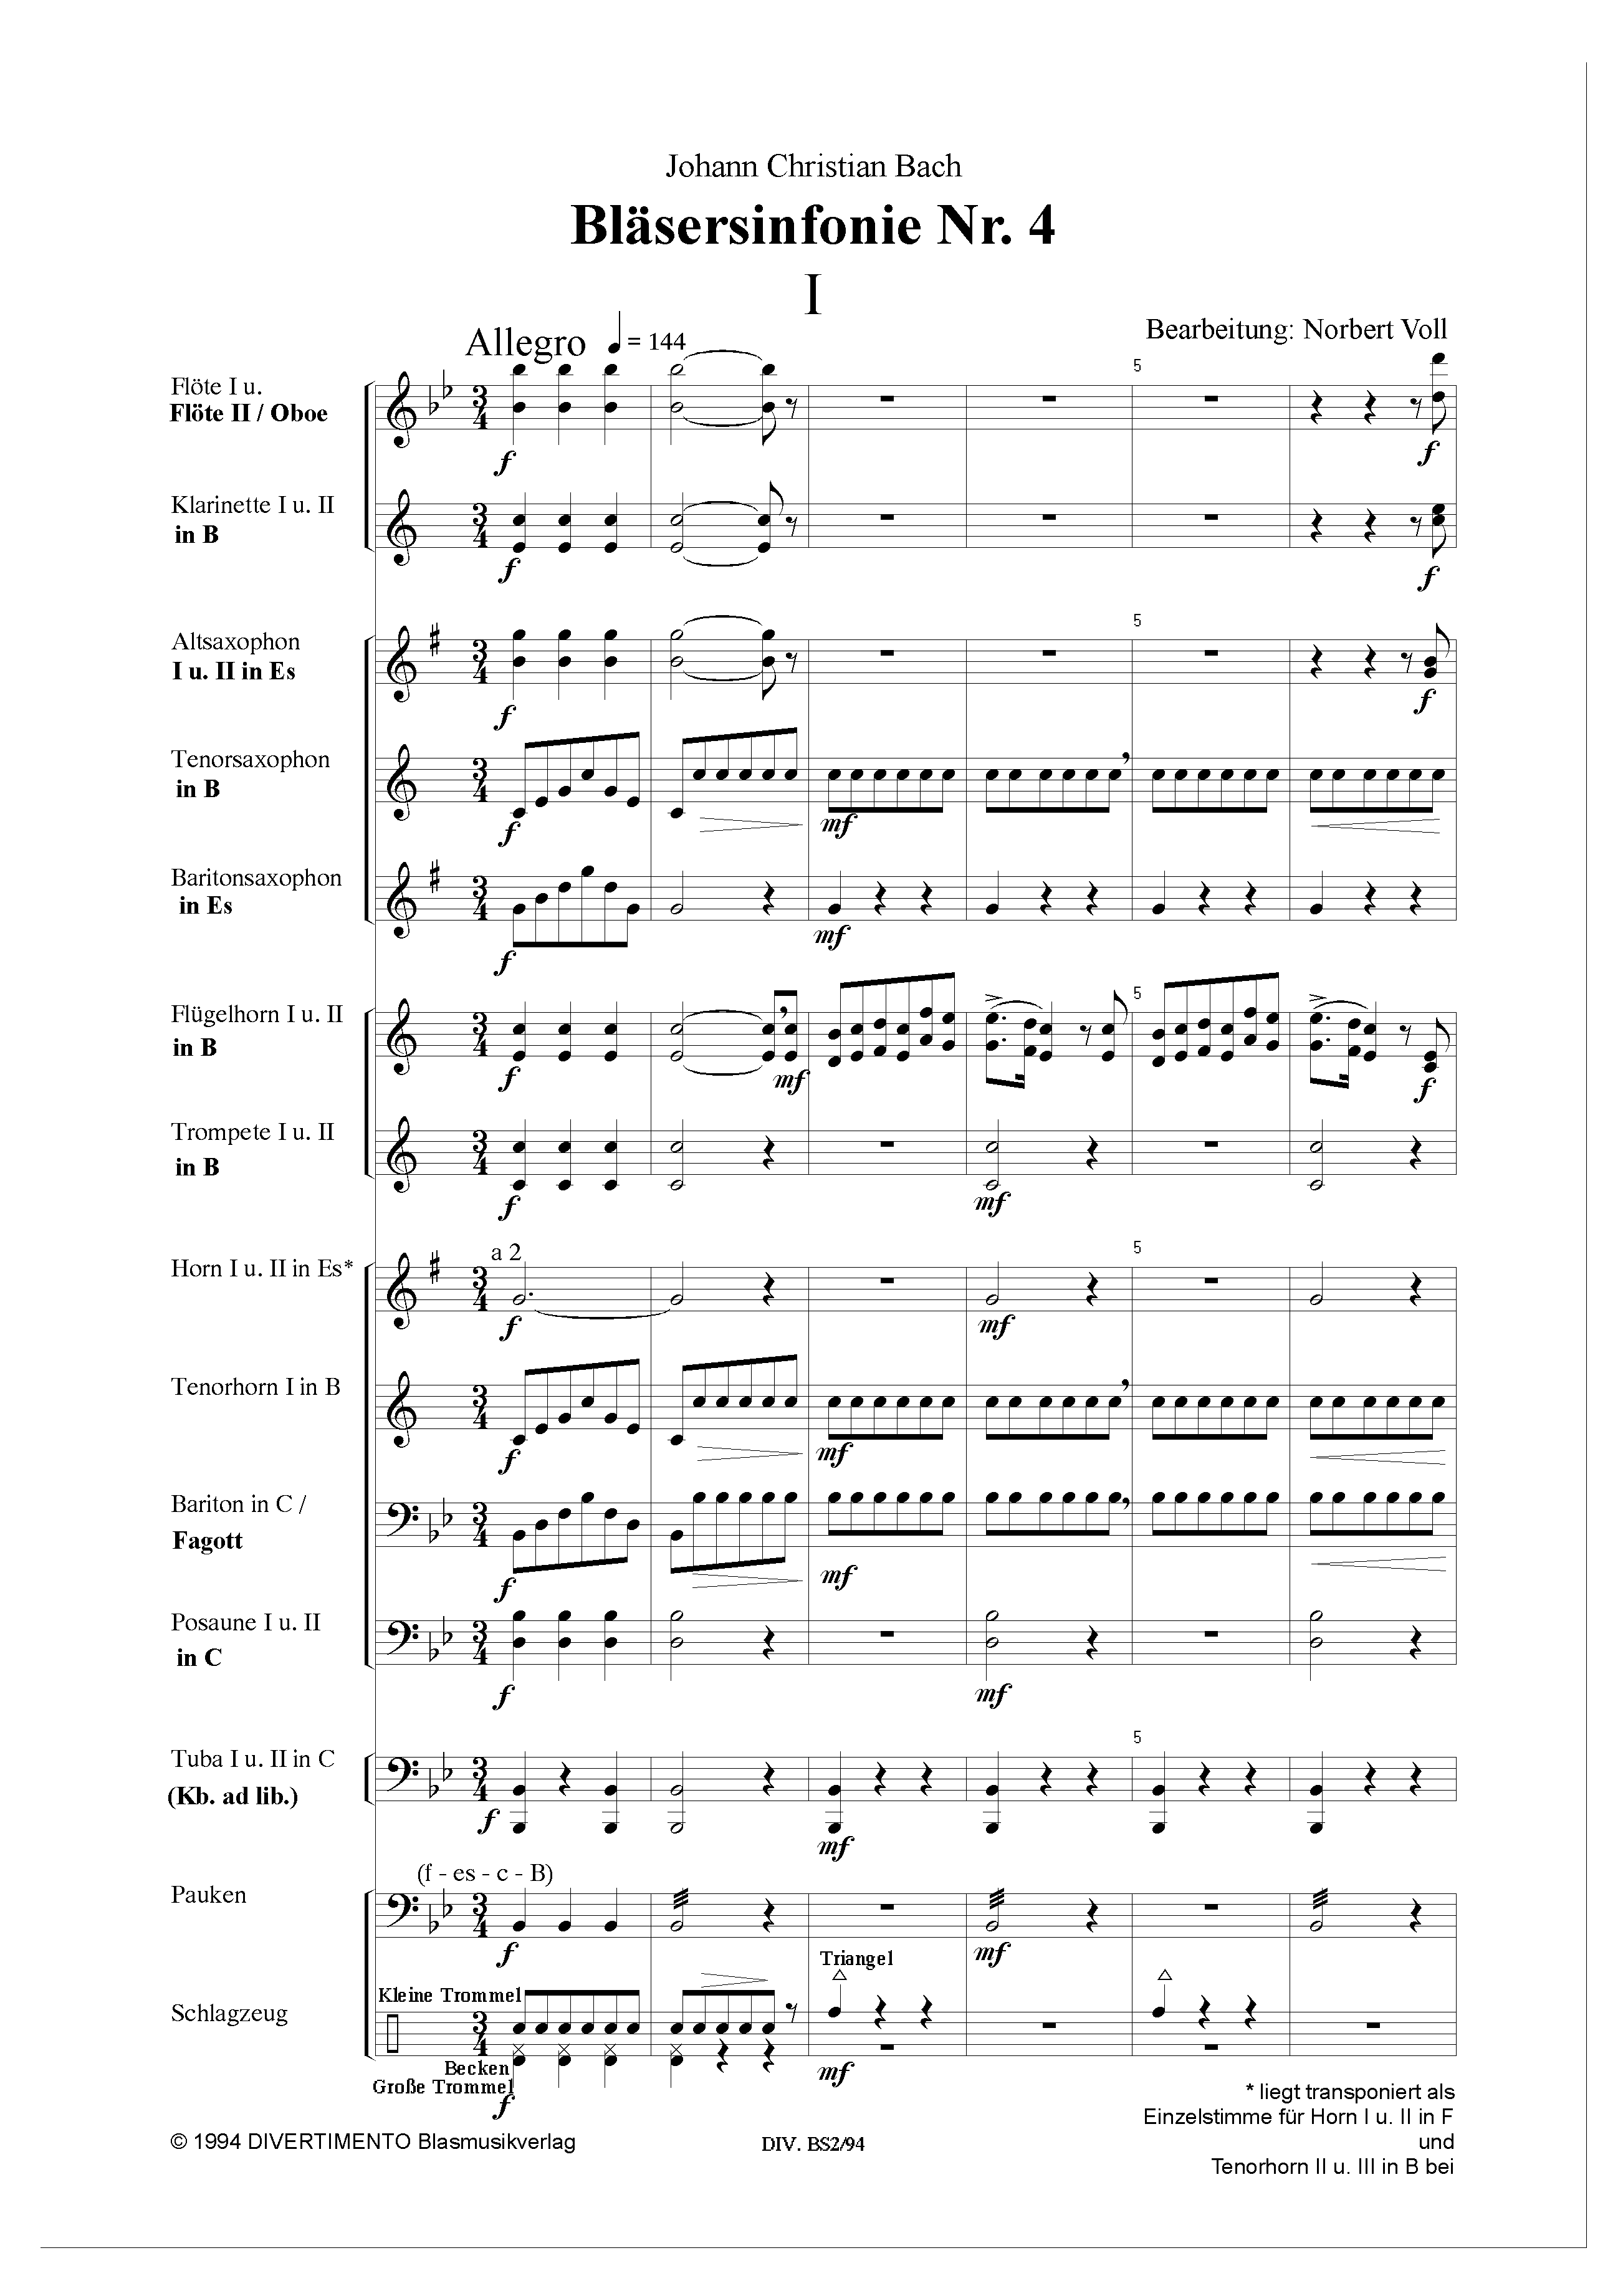 Johann Christian Bach: Bläsersinfonie Nr. 4, Partitur 1. Seite